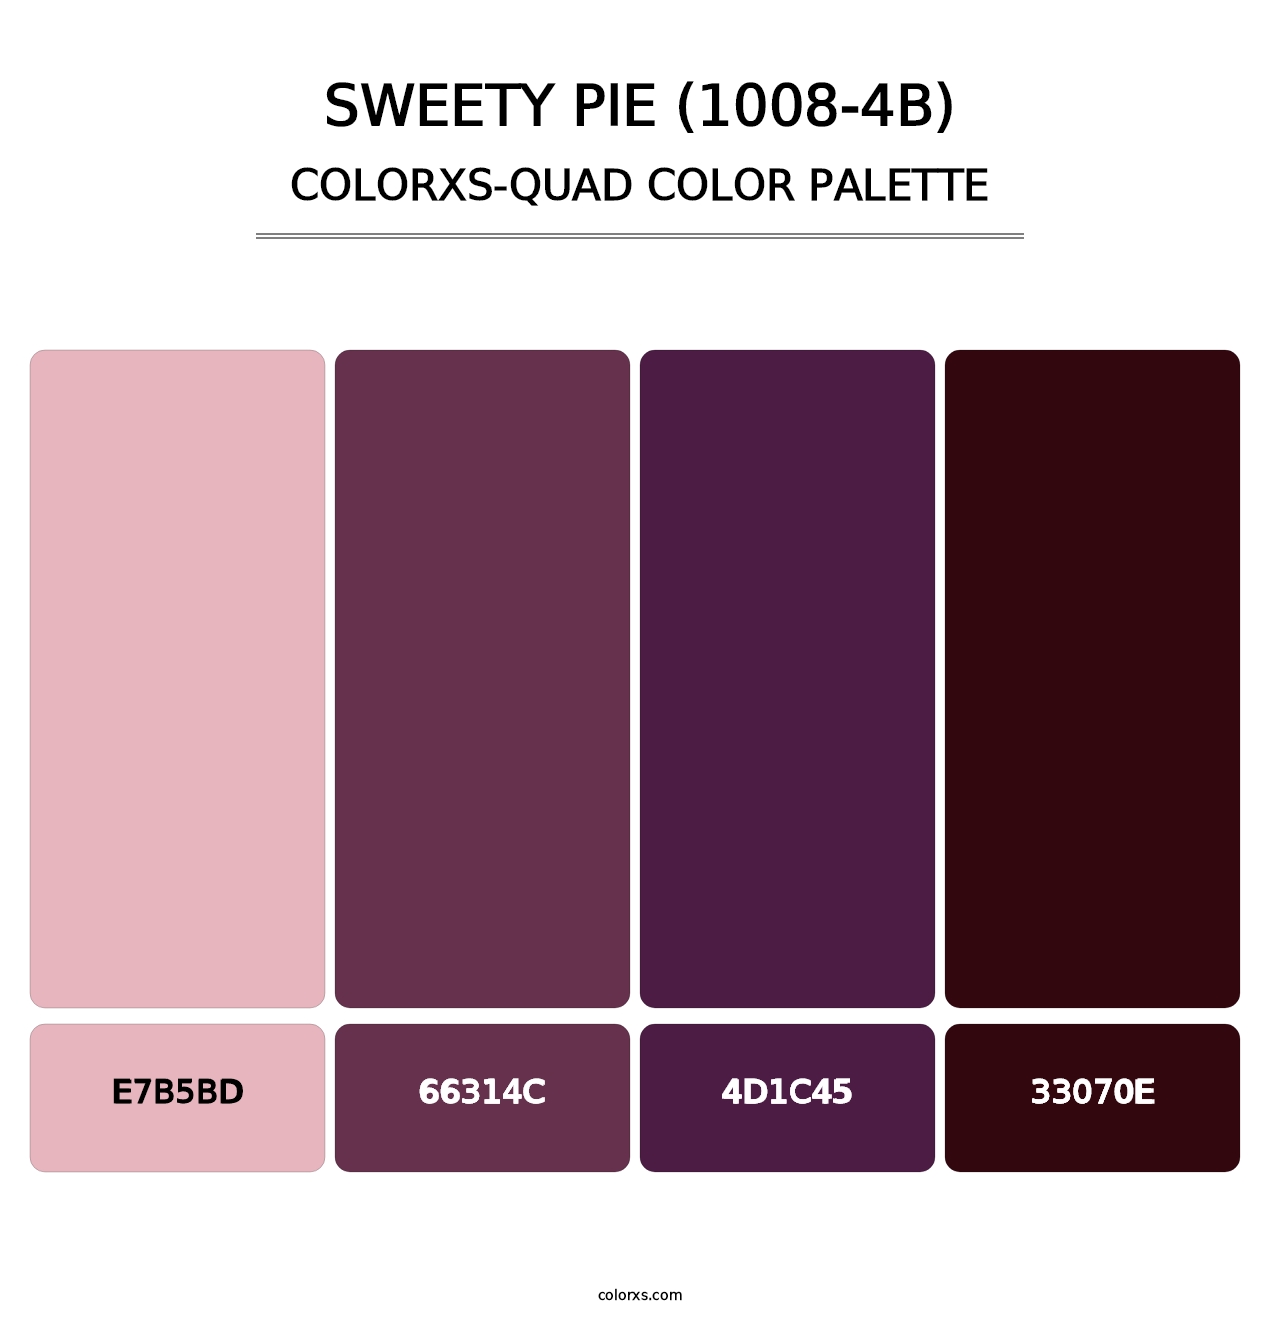 Sweety Pie (1008-4B) - Colorxs Quad Palette